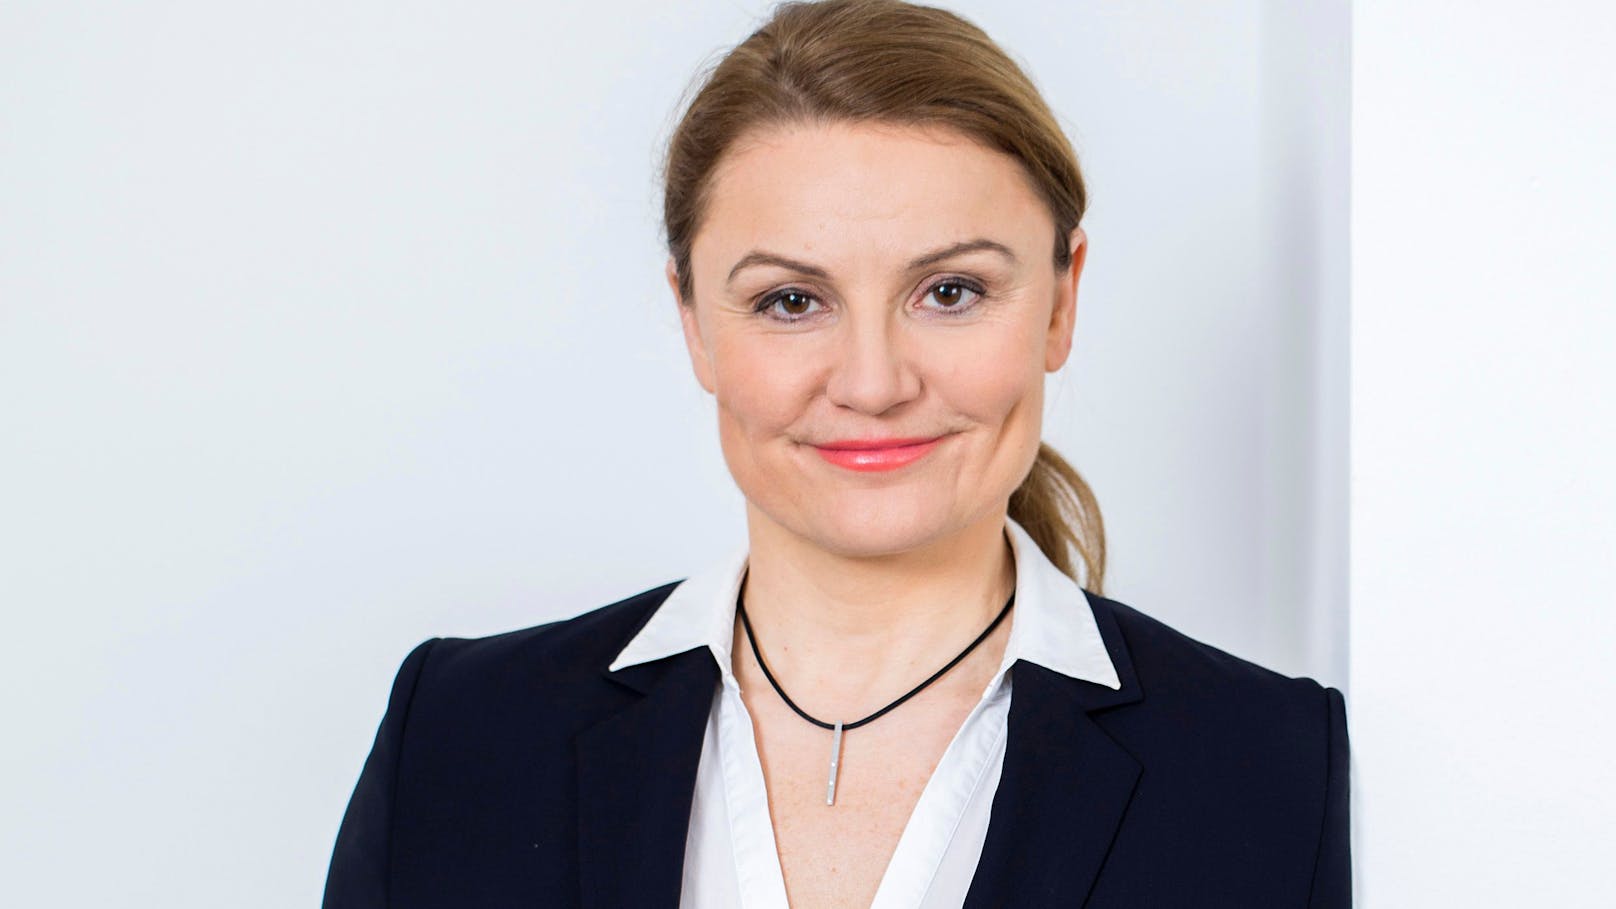 Gabriele Etzl, Immobilienexpertin und Partnerin bei Jank Weiler Operenyi/Deloitte Legal